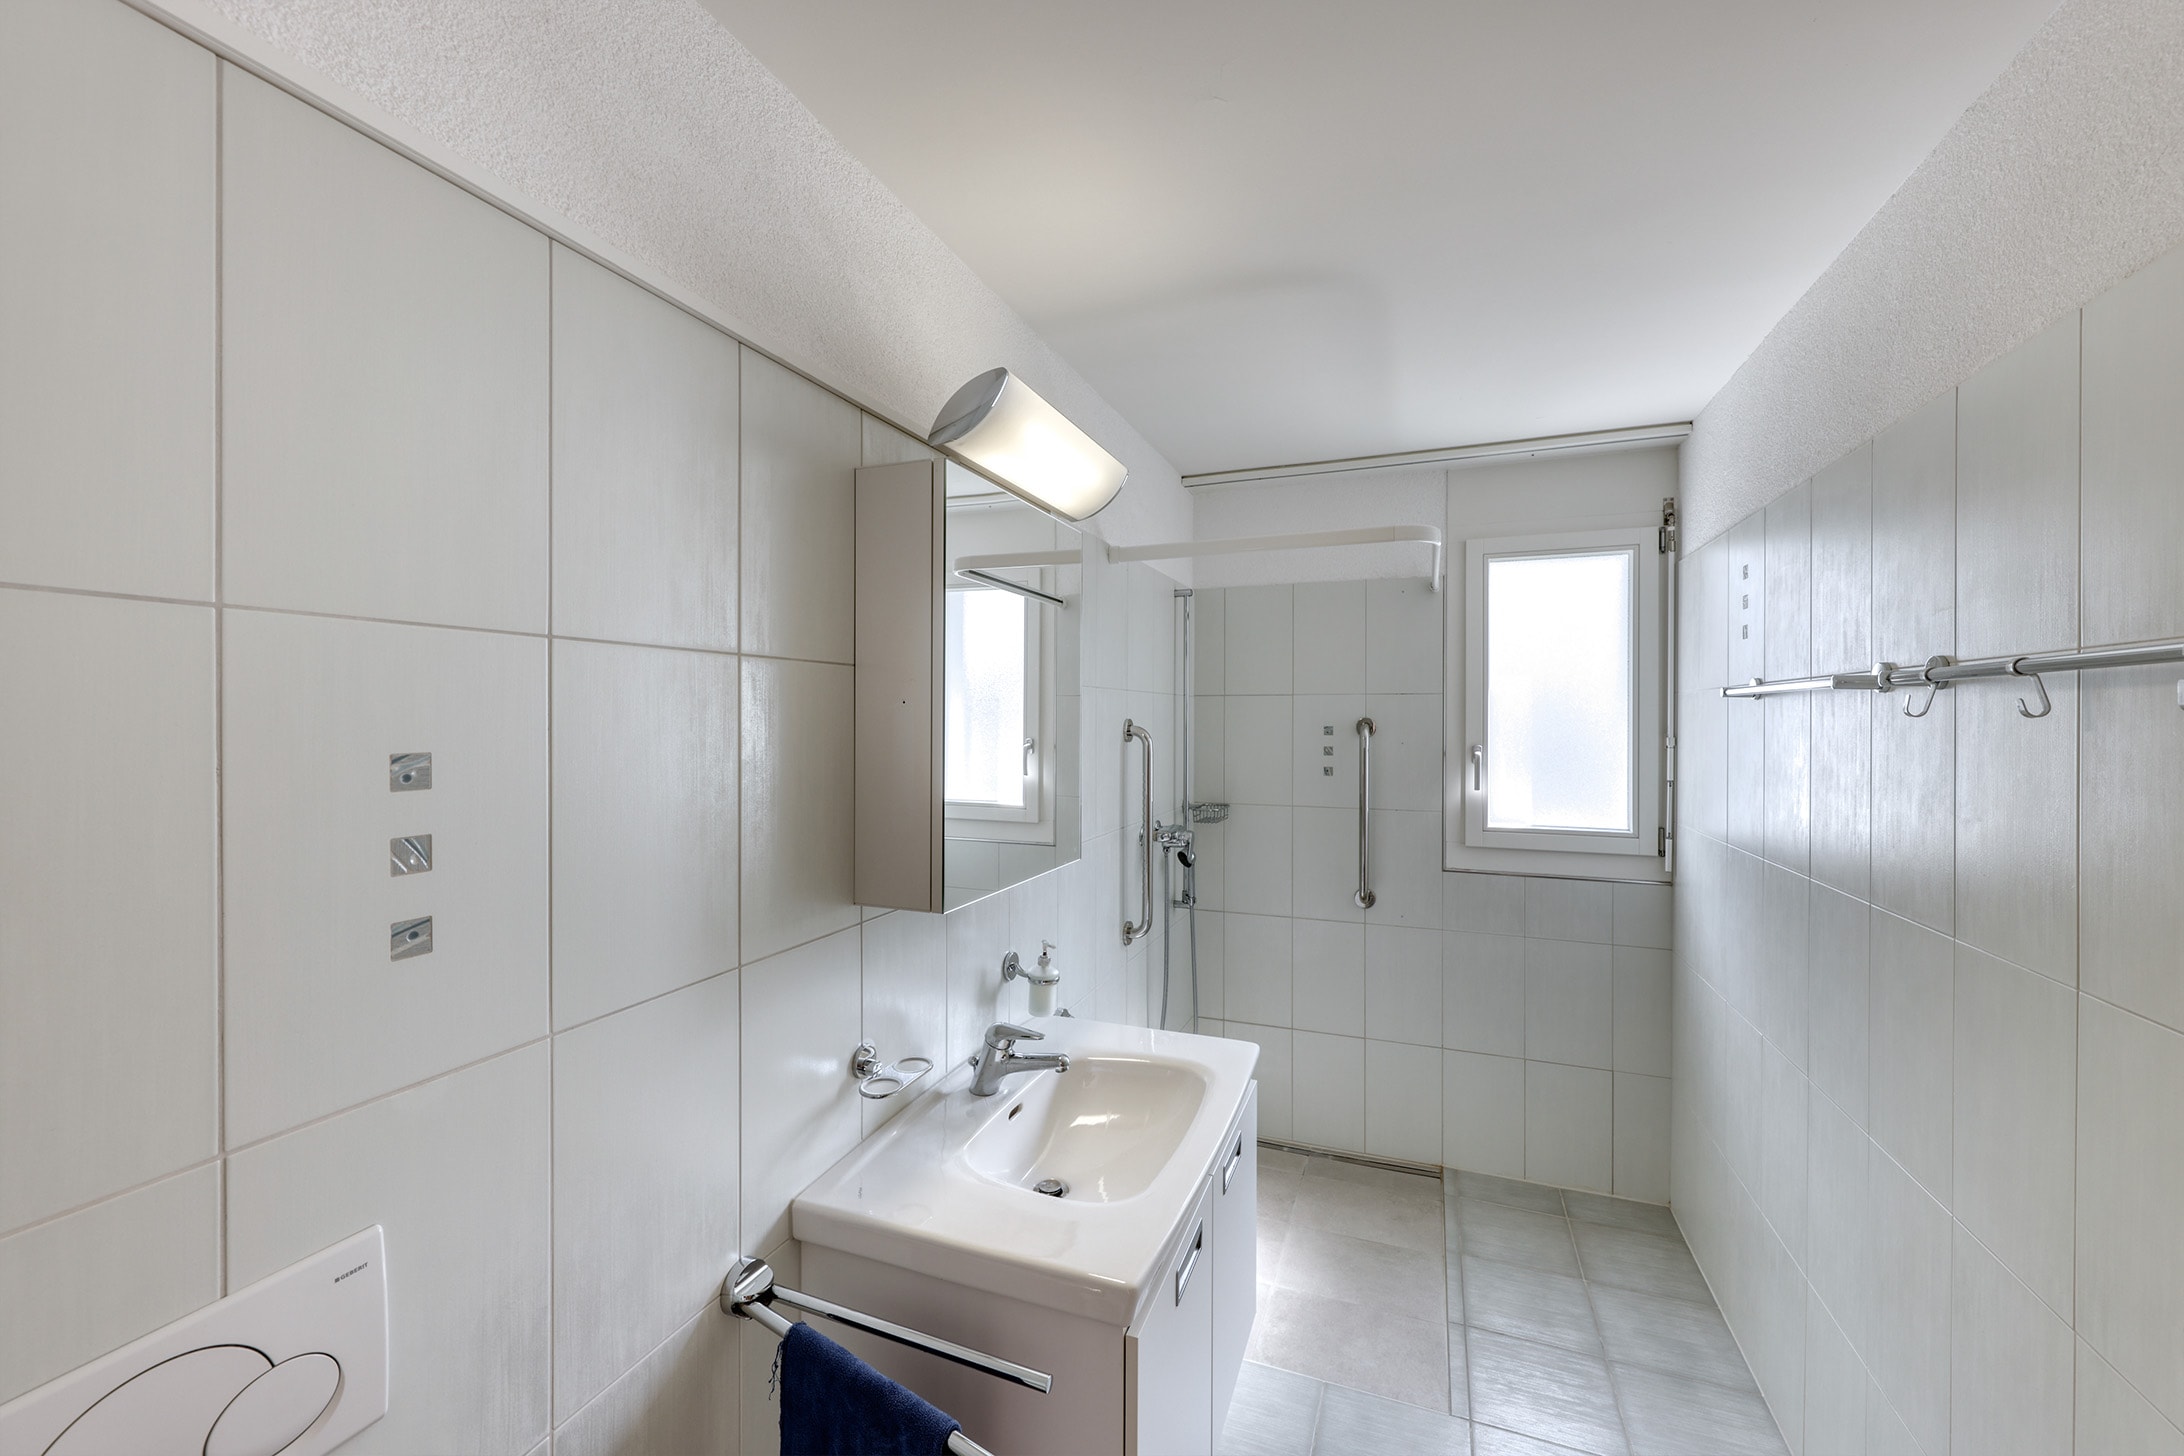 Immobilie kaufen: 3.5-Zimmer-Wohnung in Elsau, Badezimmer (Forster & Taddei Immobilien AG)